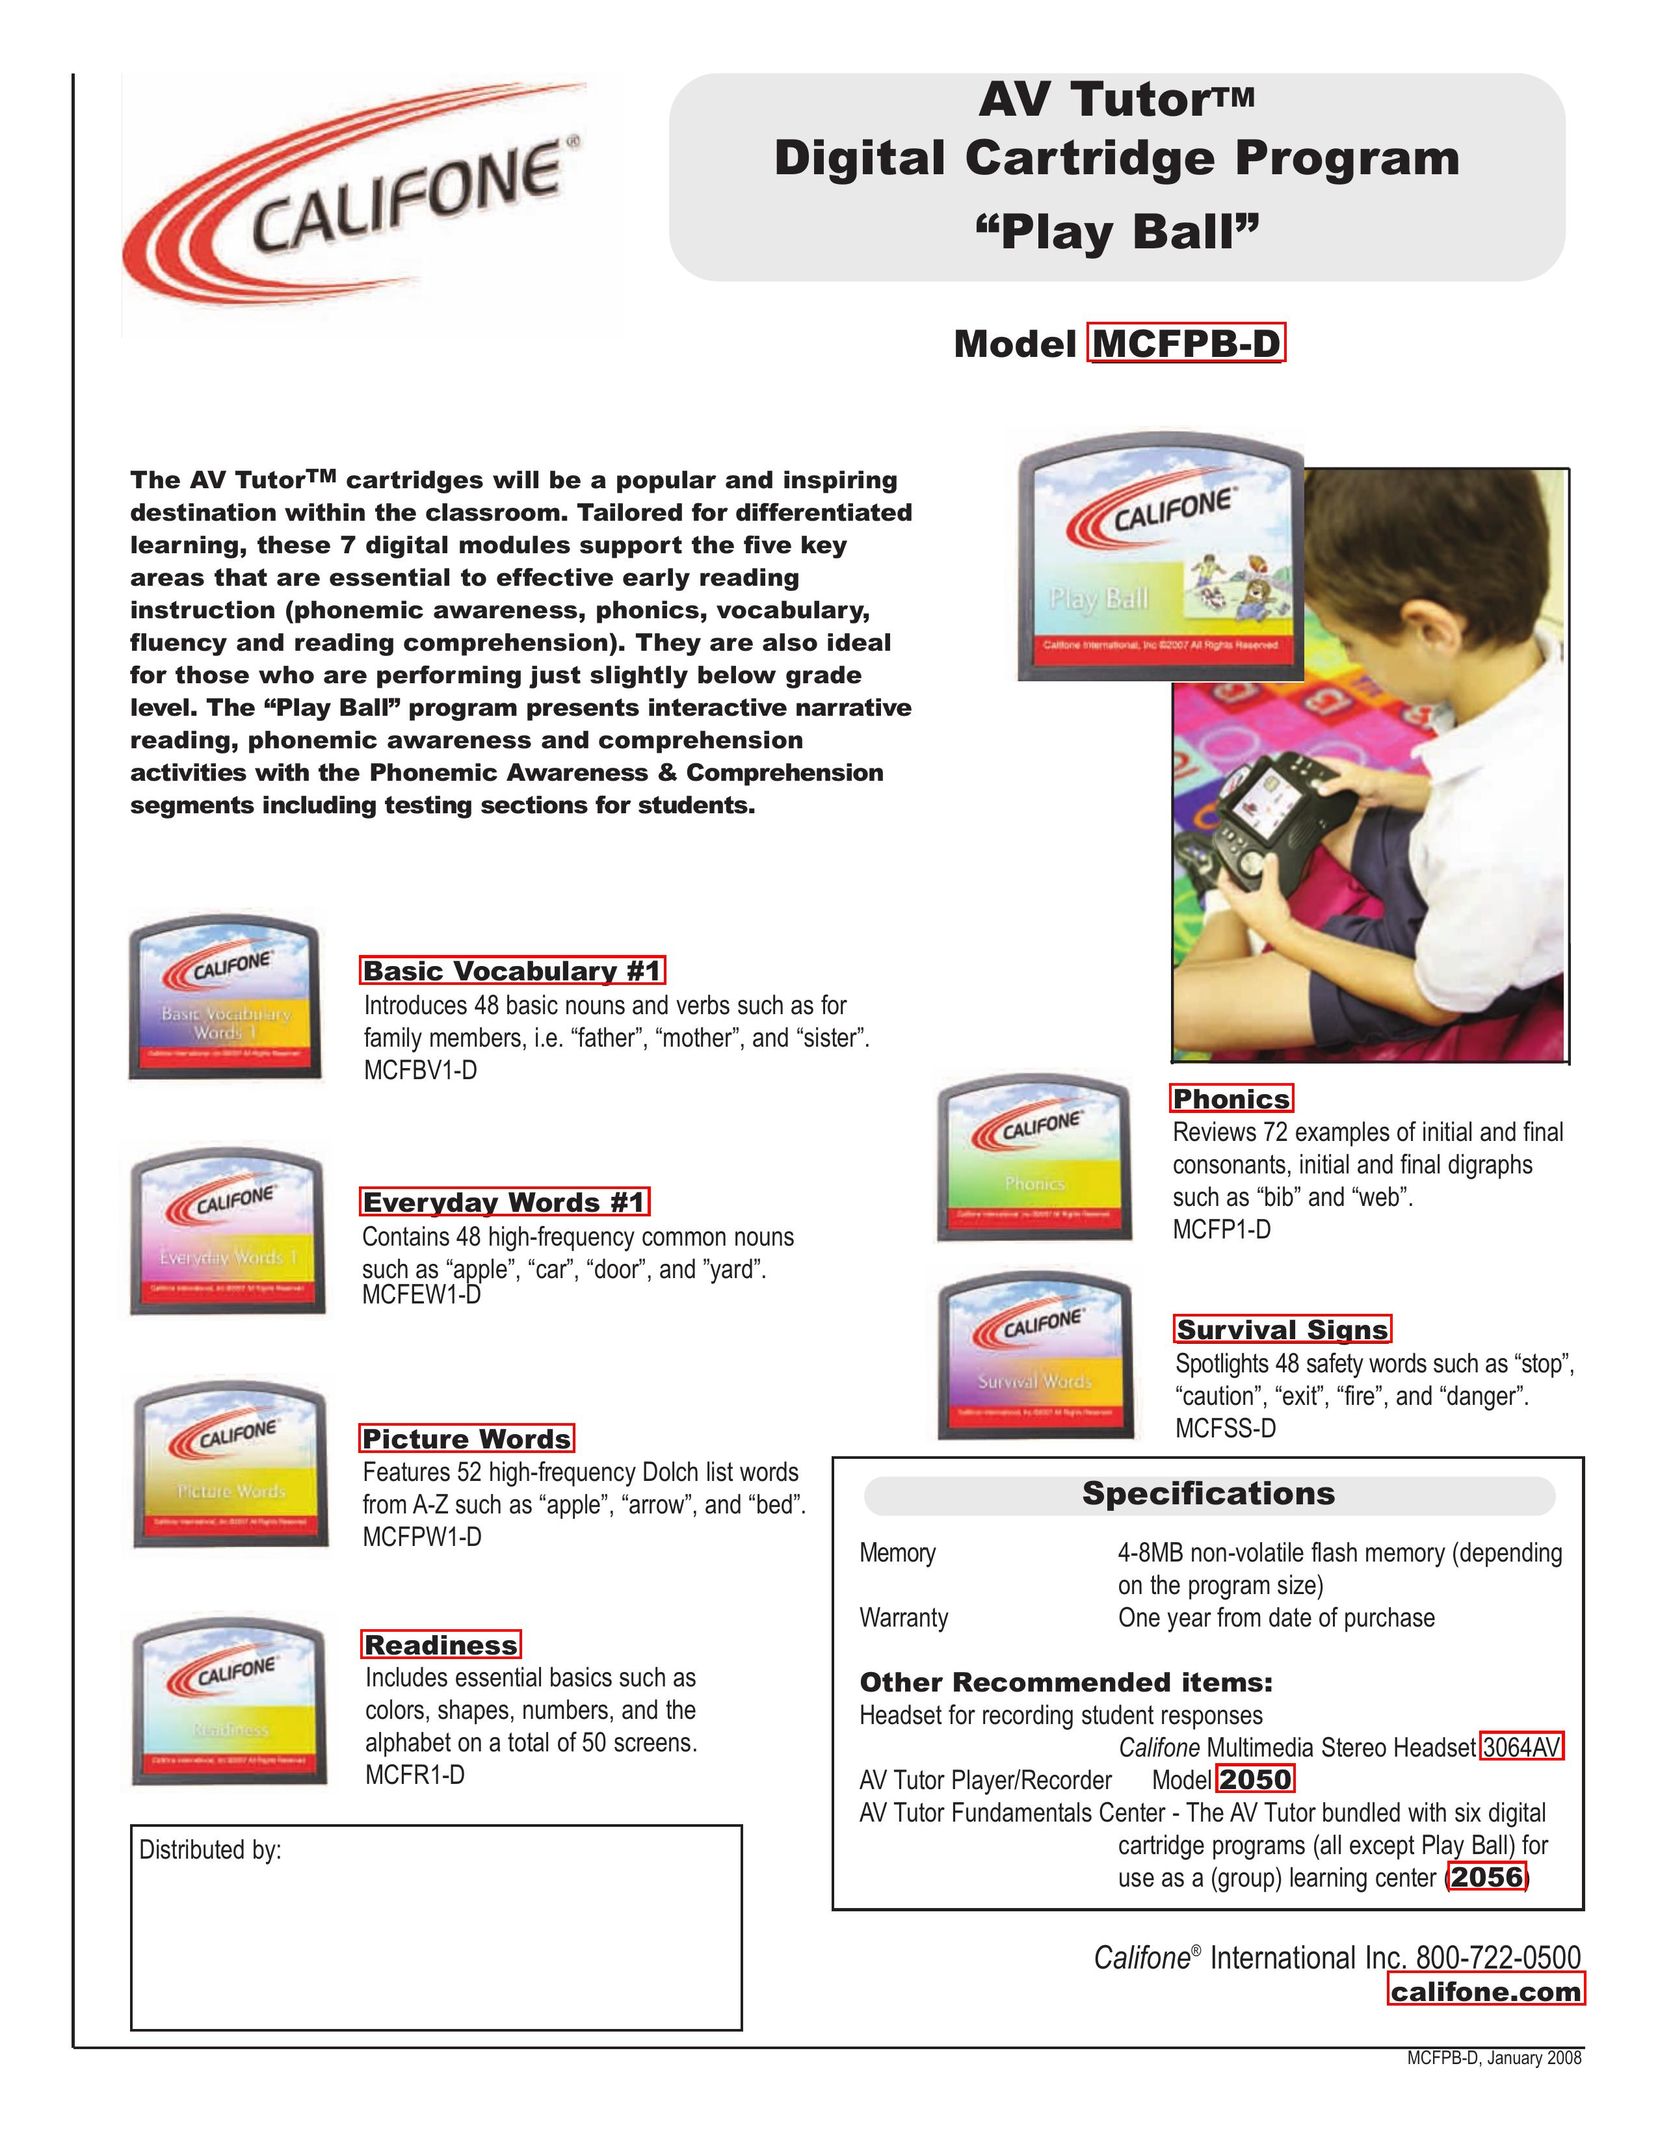 Califone MCFEW1-D Video Game Controller User Manual